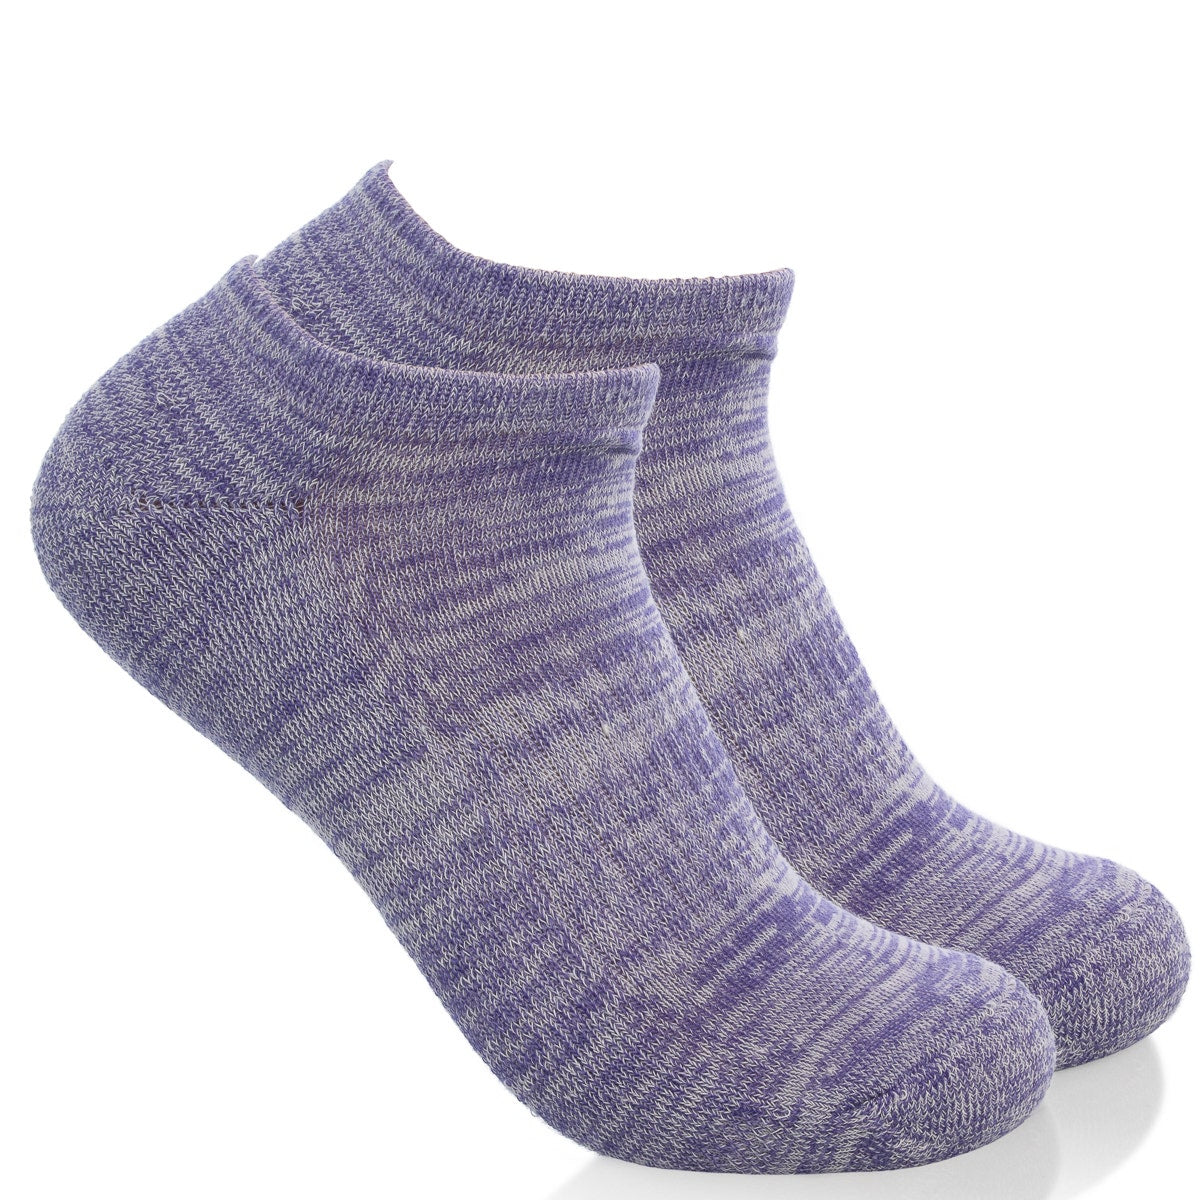 6pk Union Bay Women’s Low-Cut Liners – Stylish No-Show Socks